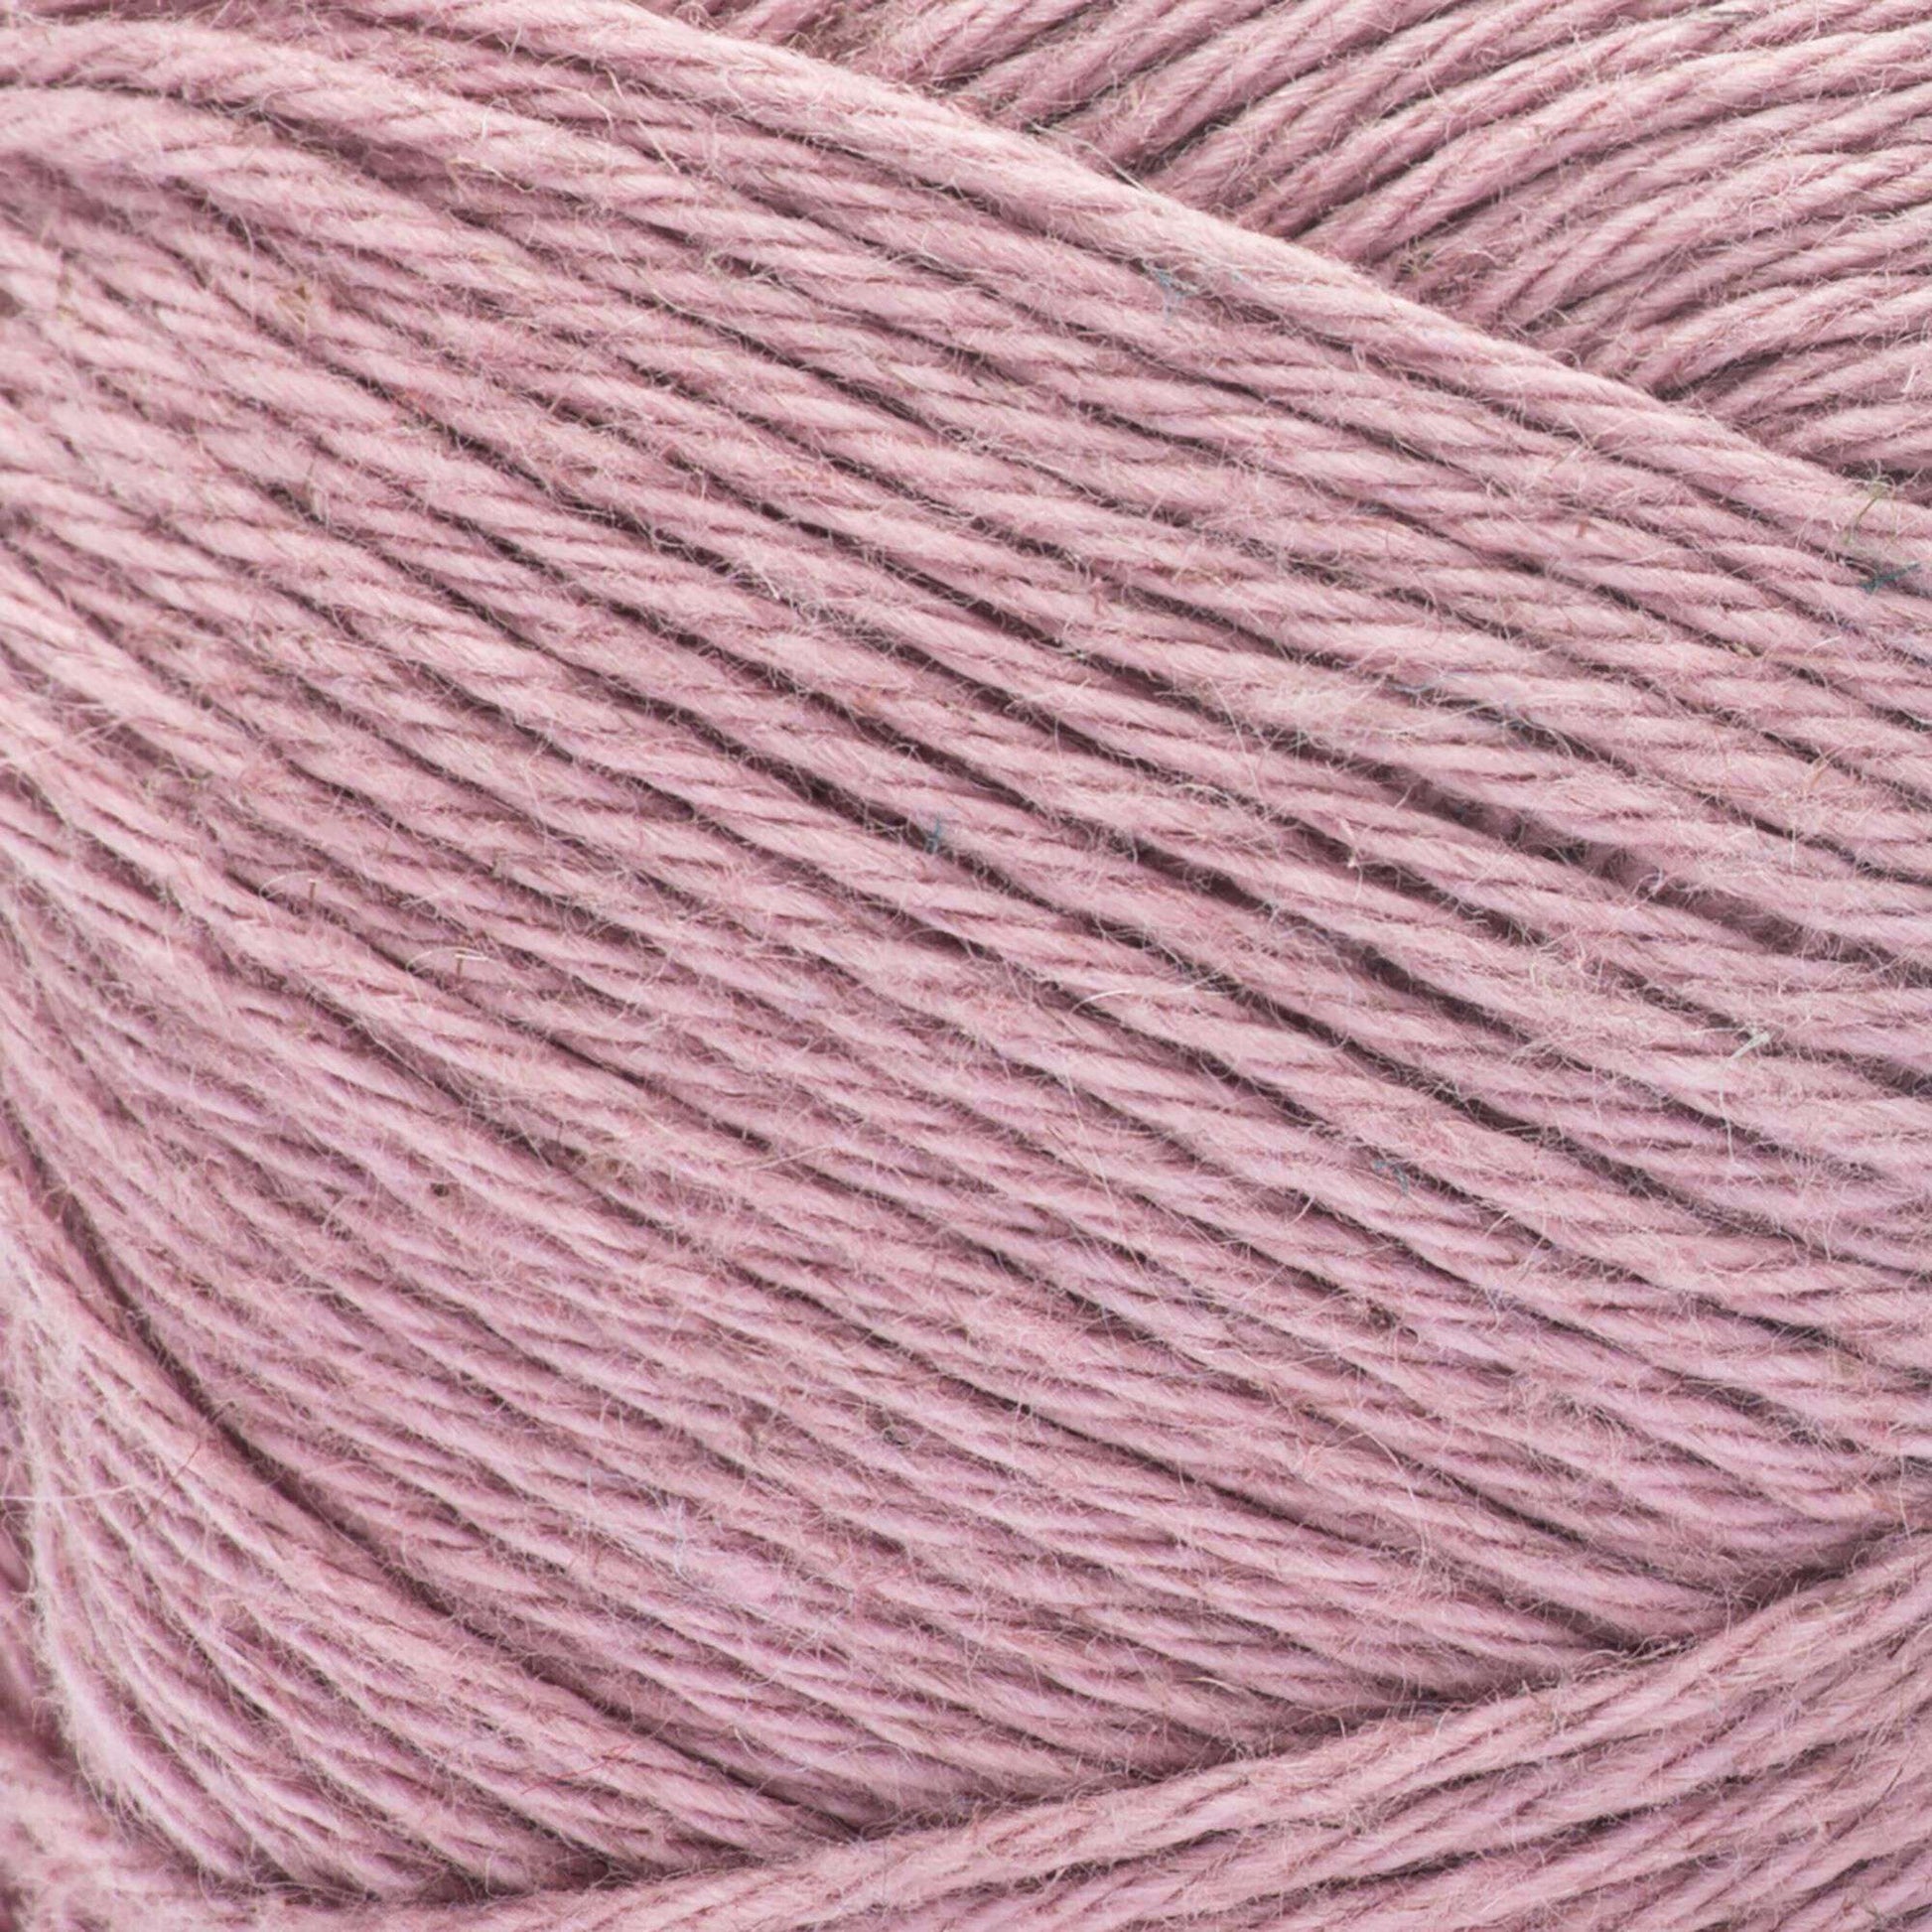 Patons Linen Yarn | Yarnspirations